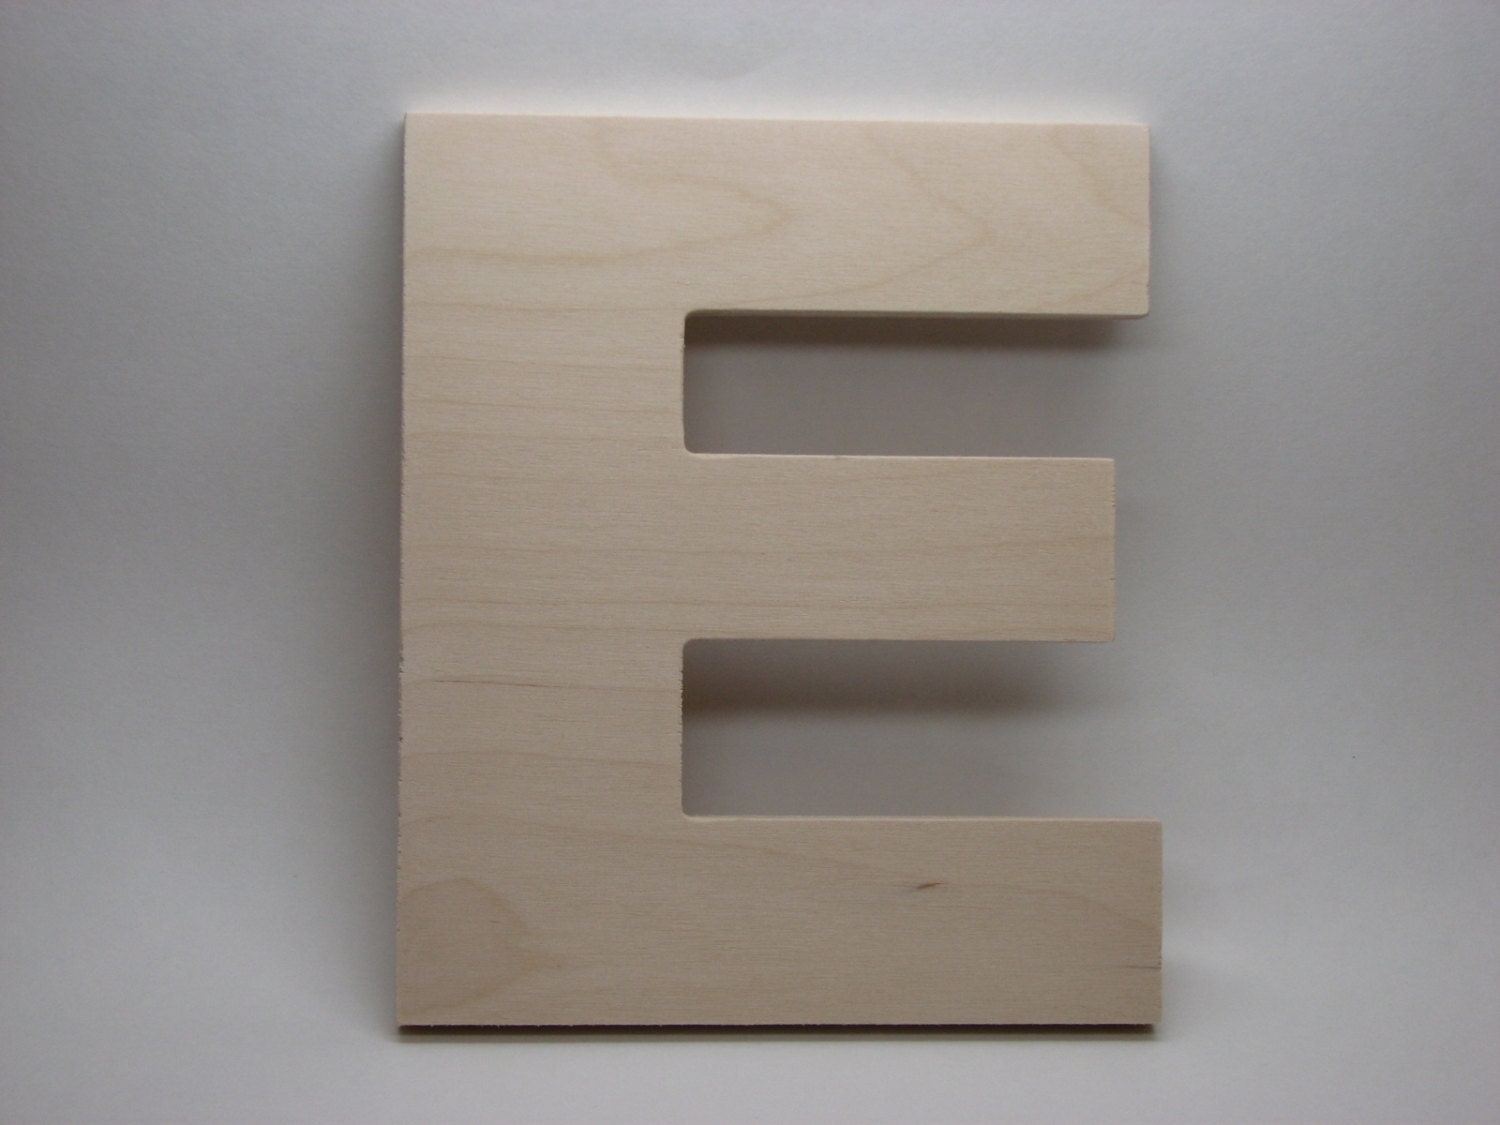 Wooden Fillable Letter E 22cm